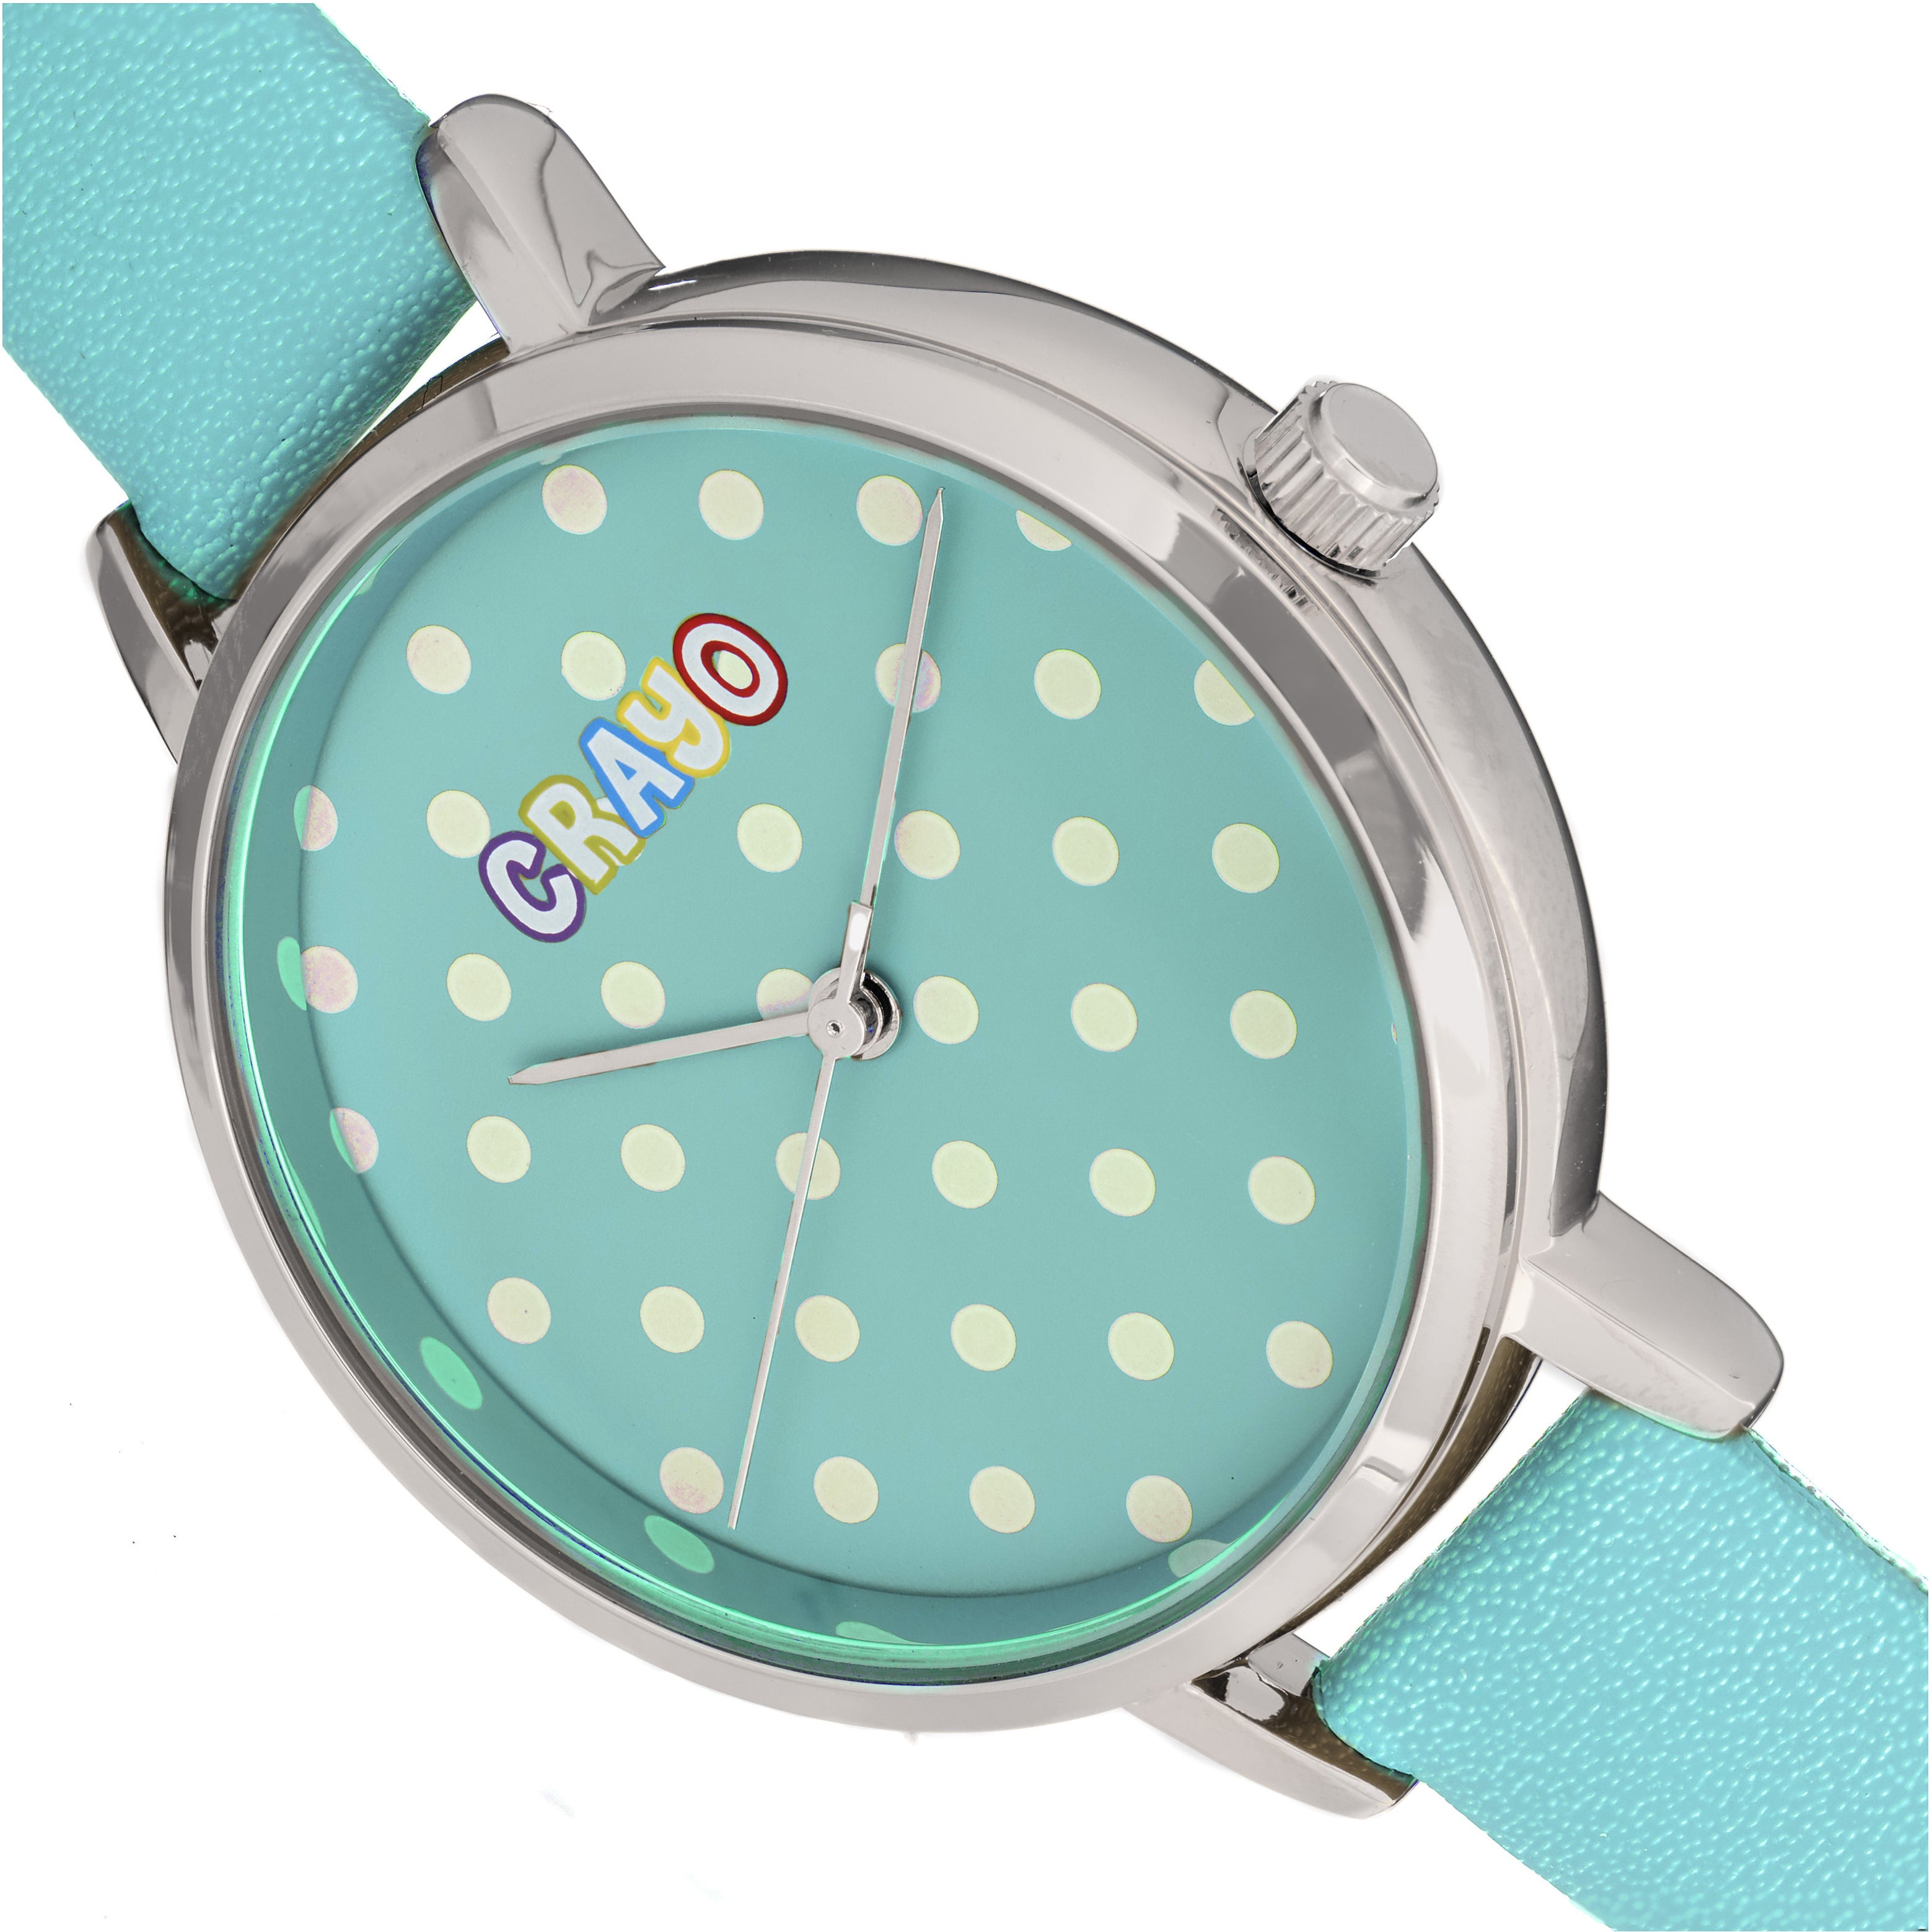 Crayo Dot Strap Watch - Blue - CRACR5902